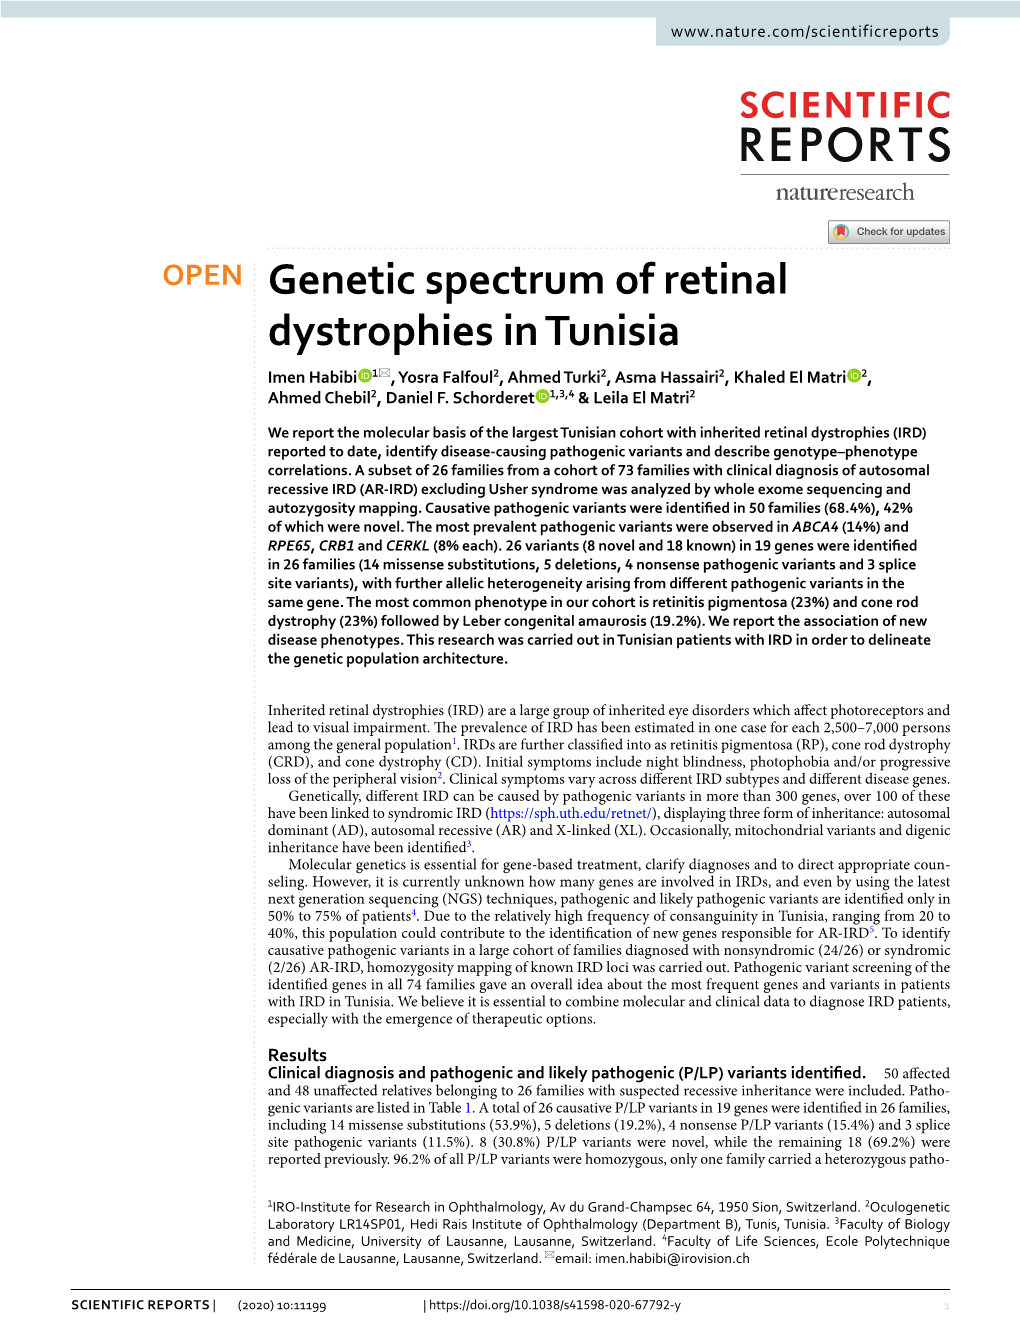 Genetic Spectrum of Retinal Dystrophies in Tunisia Imen Habibi 1*, Yosra Falfoul2, Ahmed Turki2, Asma Hassairi2, Khaled El Matri 2, Ahmed Chebil2, Daniel F